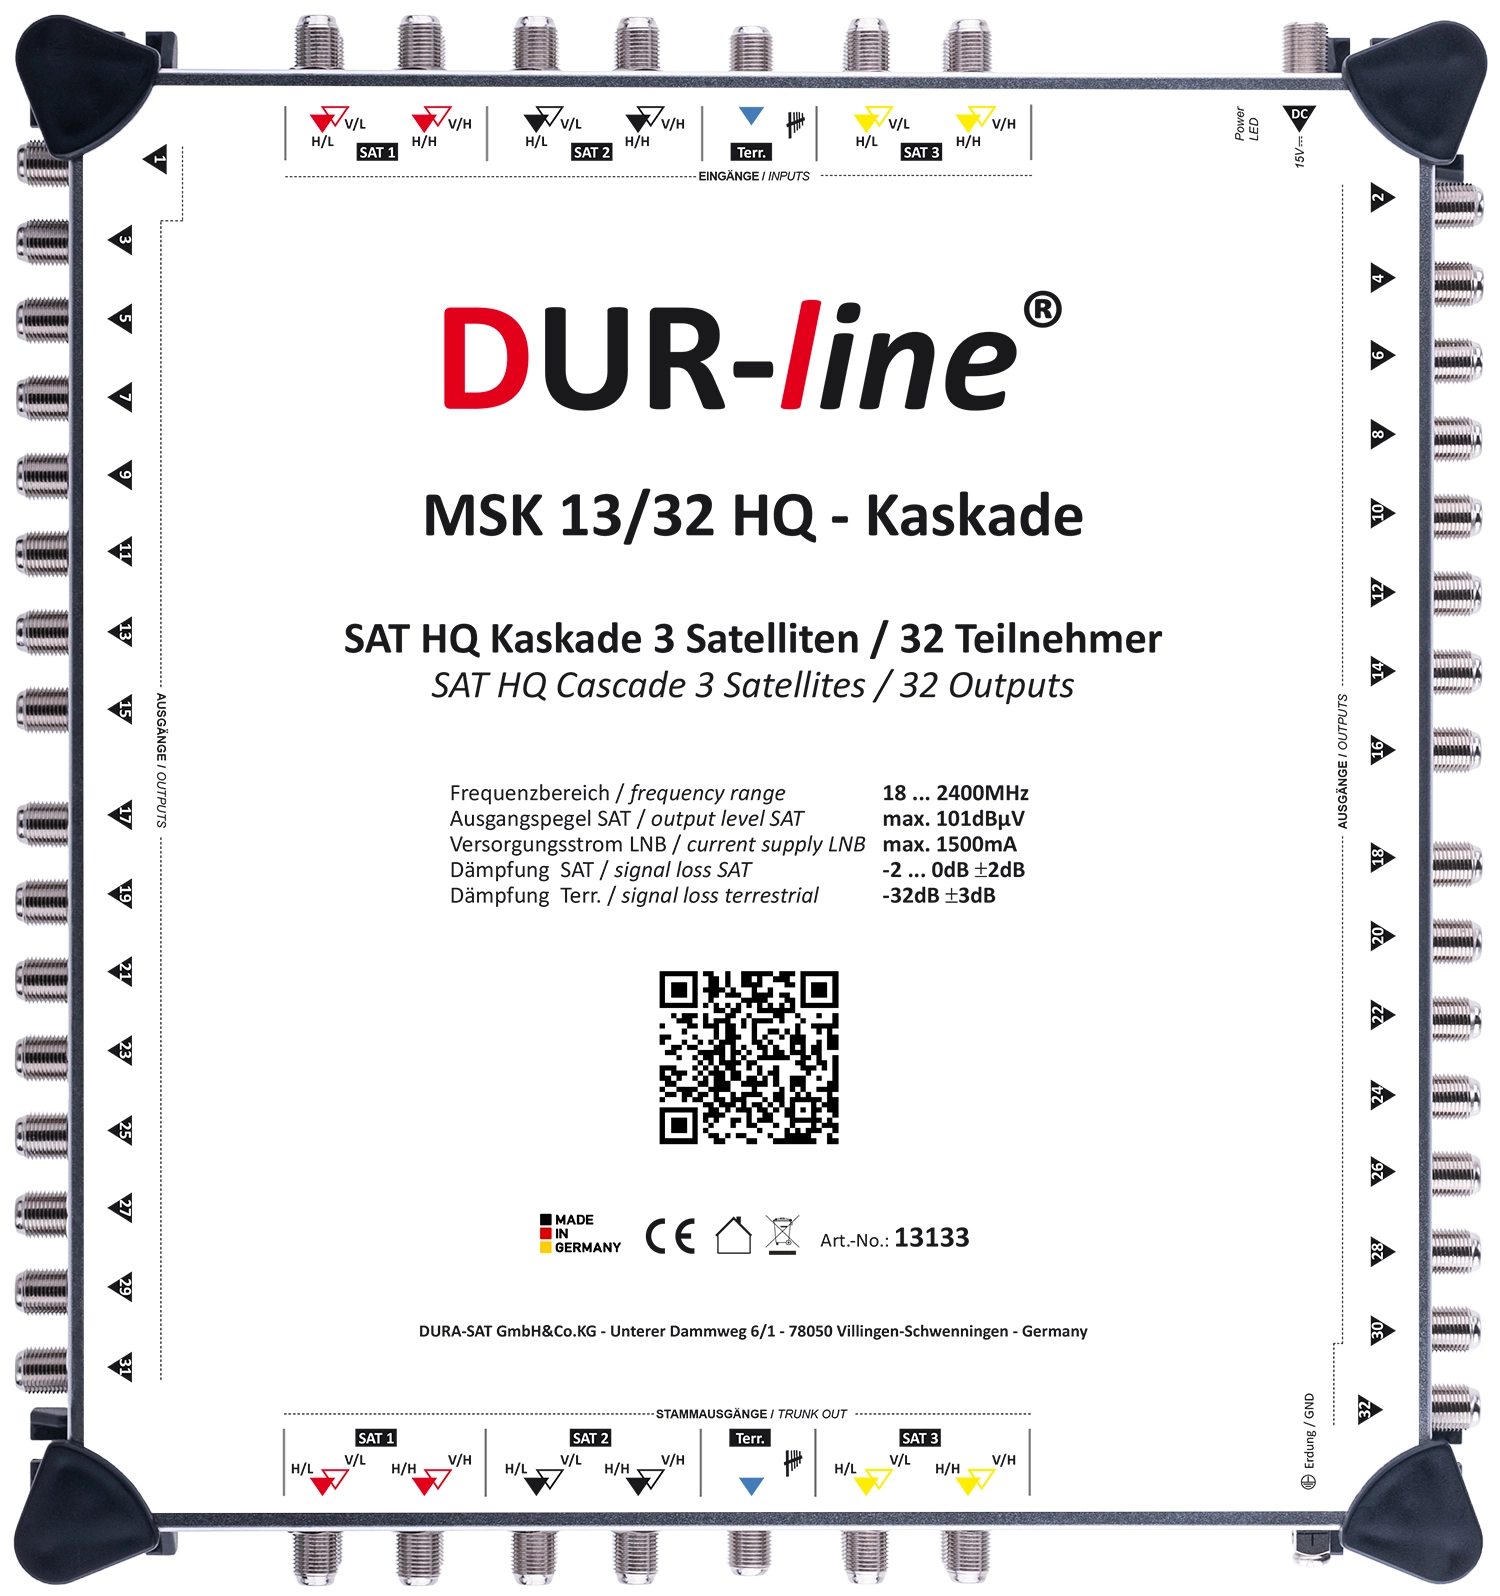 DUR-line MSK 13/32 HQ - Kaskade